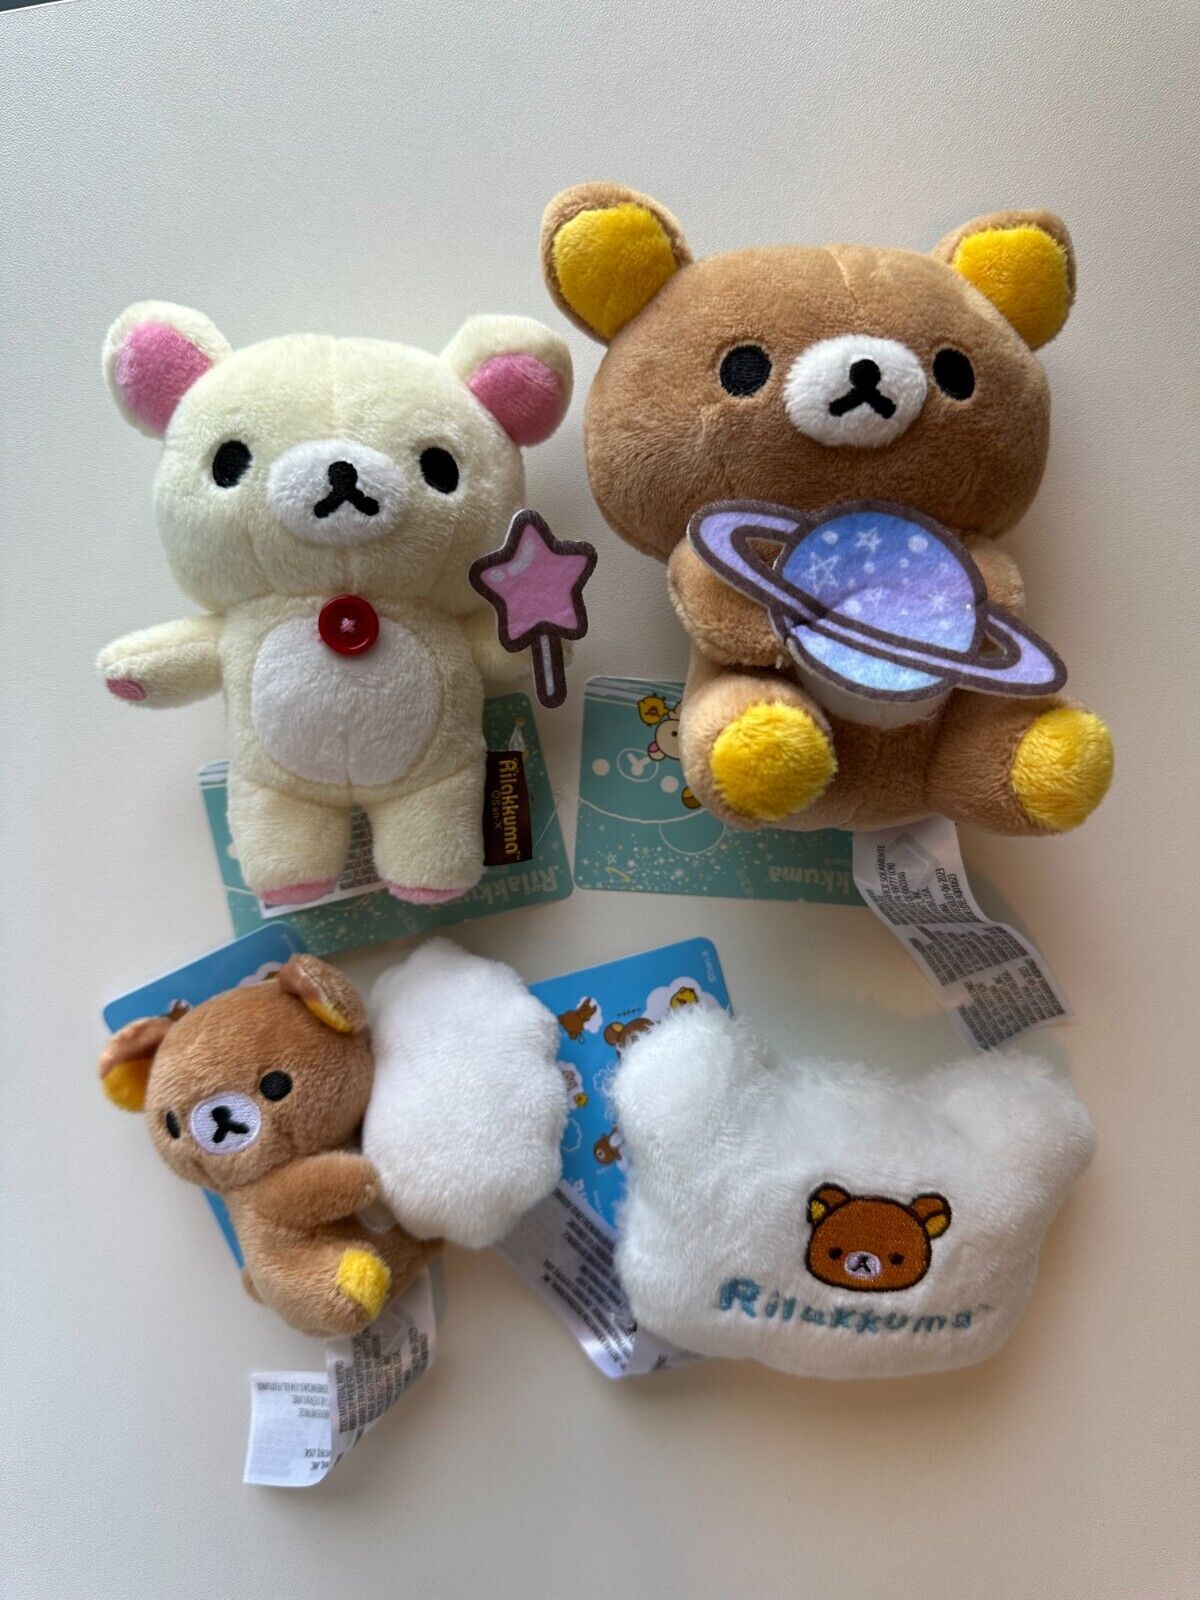 *NEW* with tags - Lot of 4 mini Rilakkuma Plush Toys from Round 1